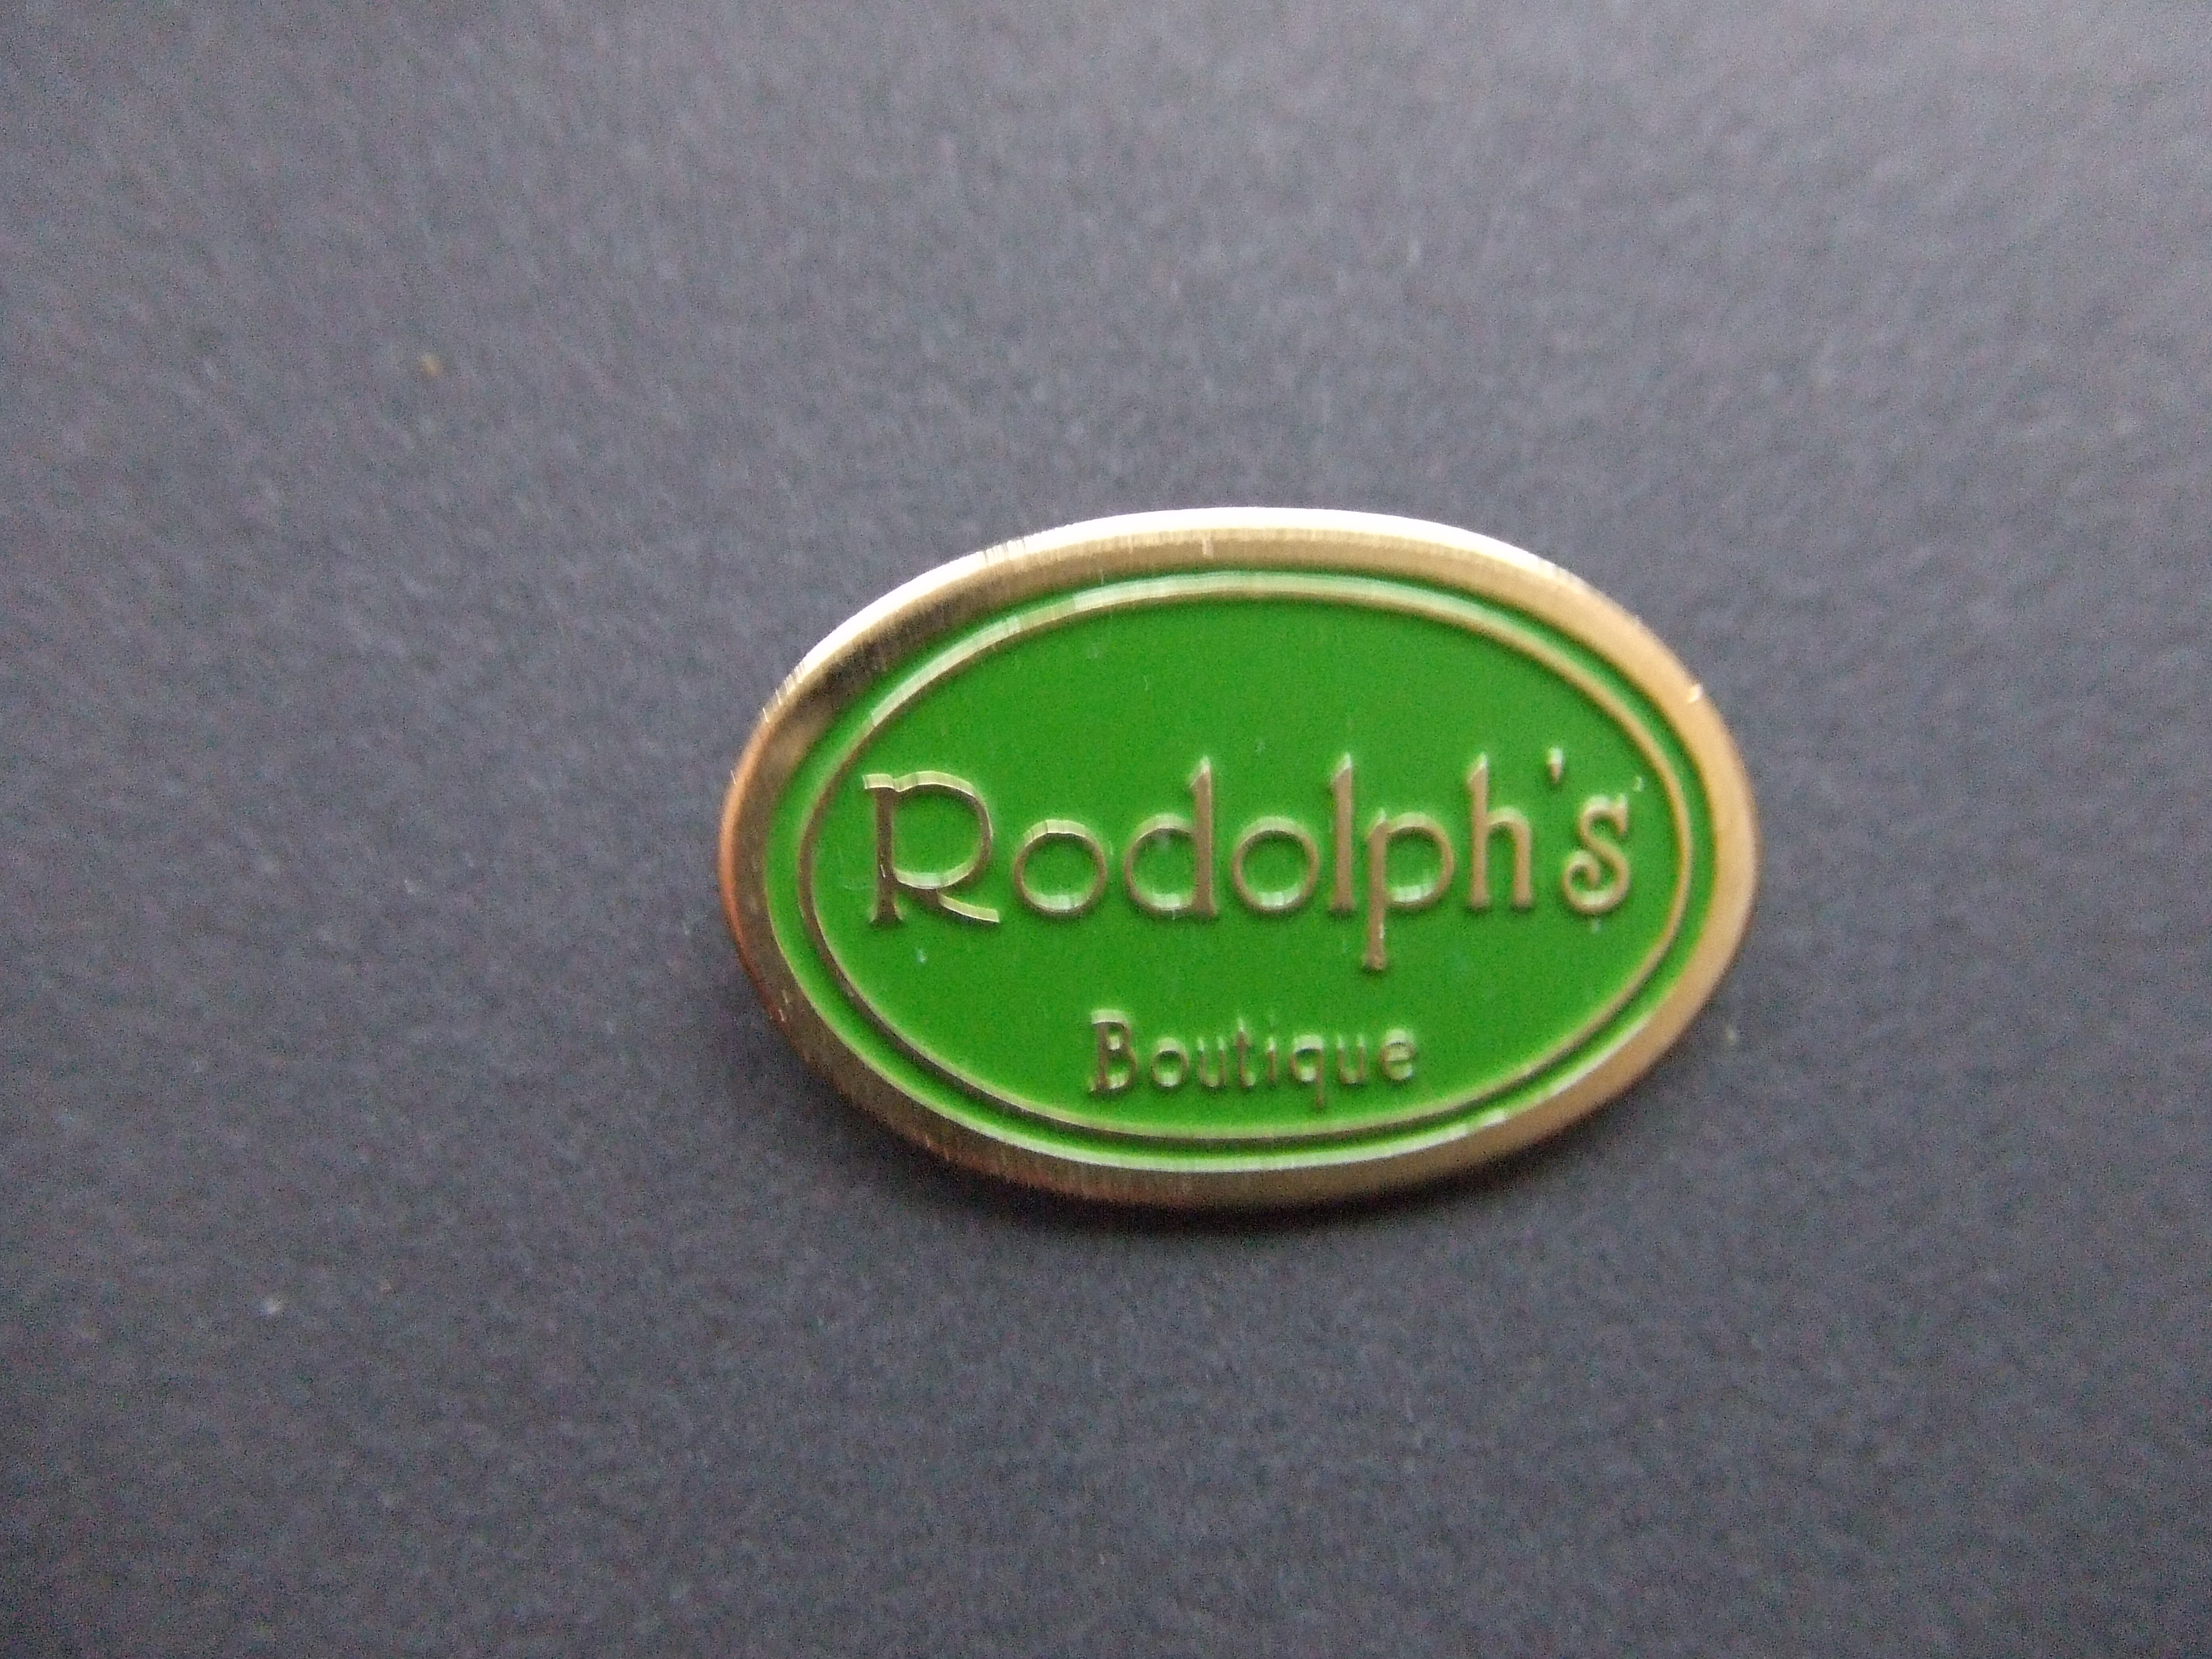 Rodolph' s boutique